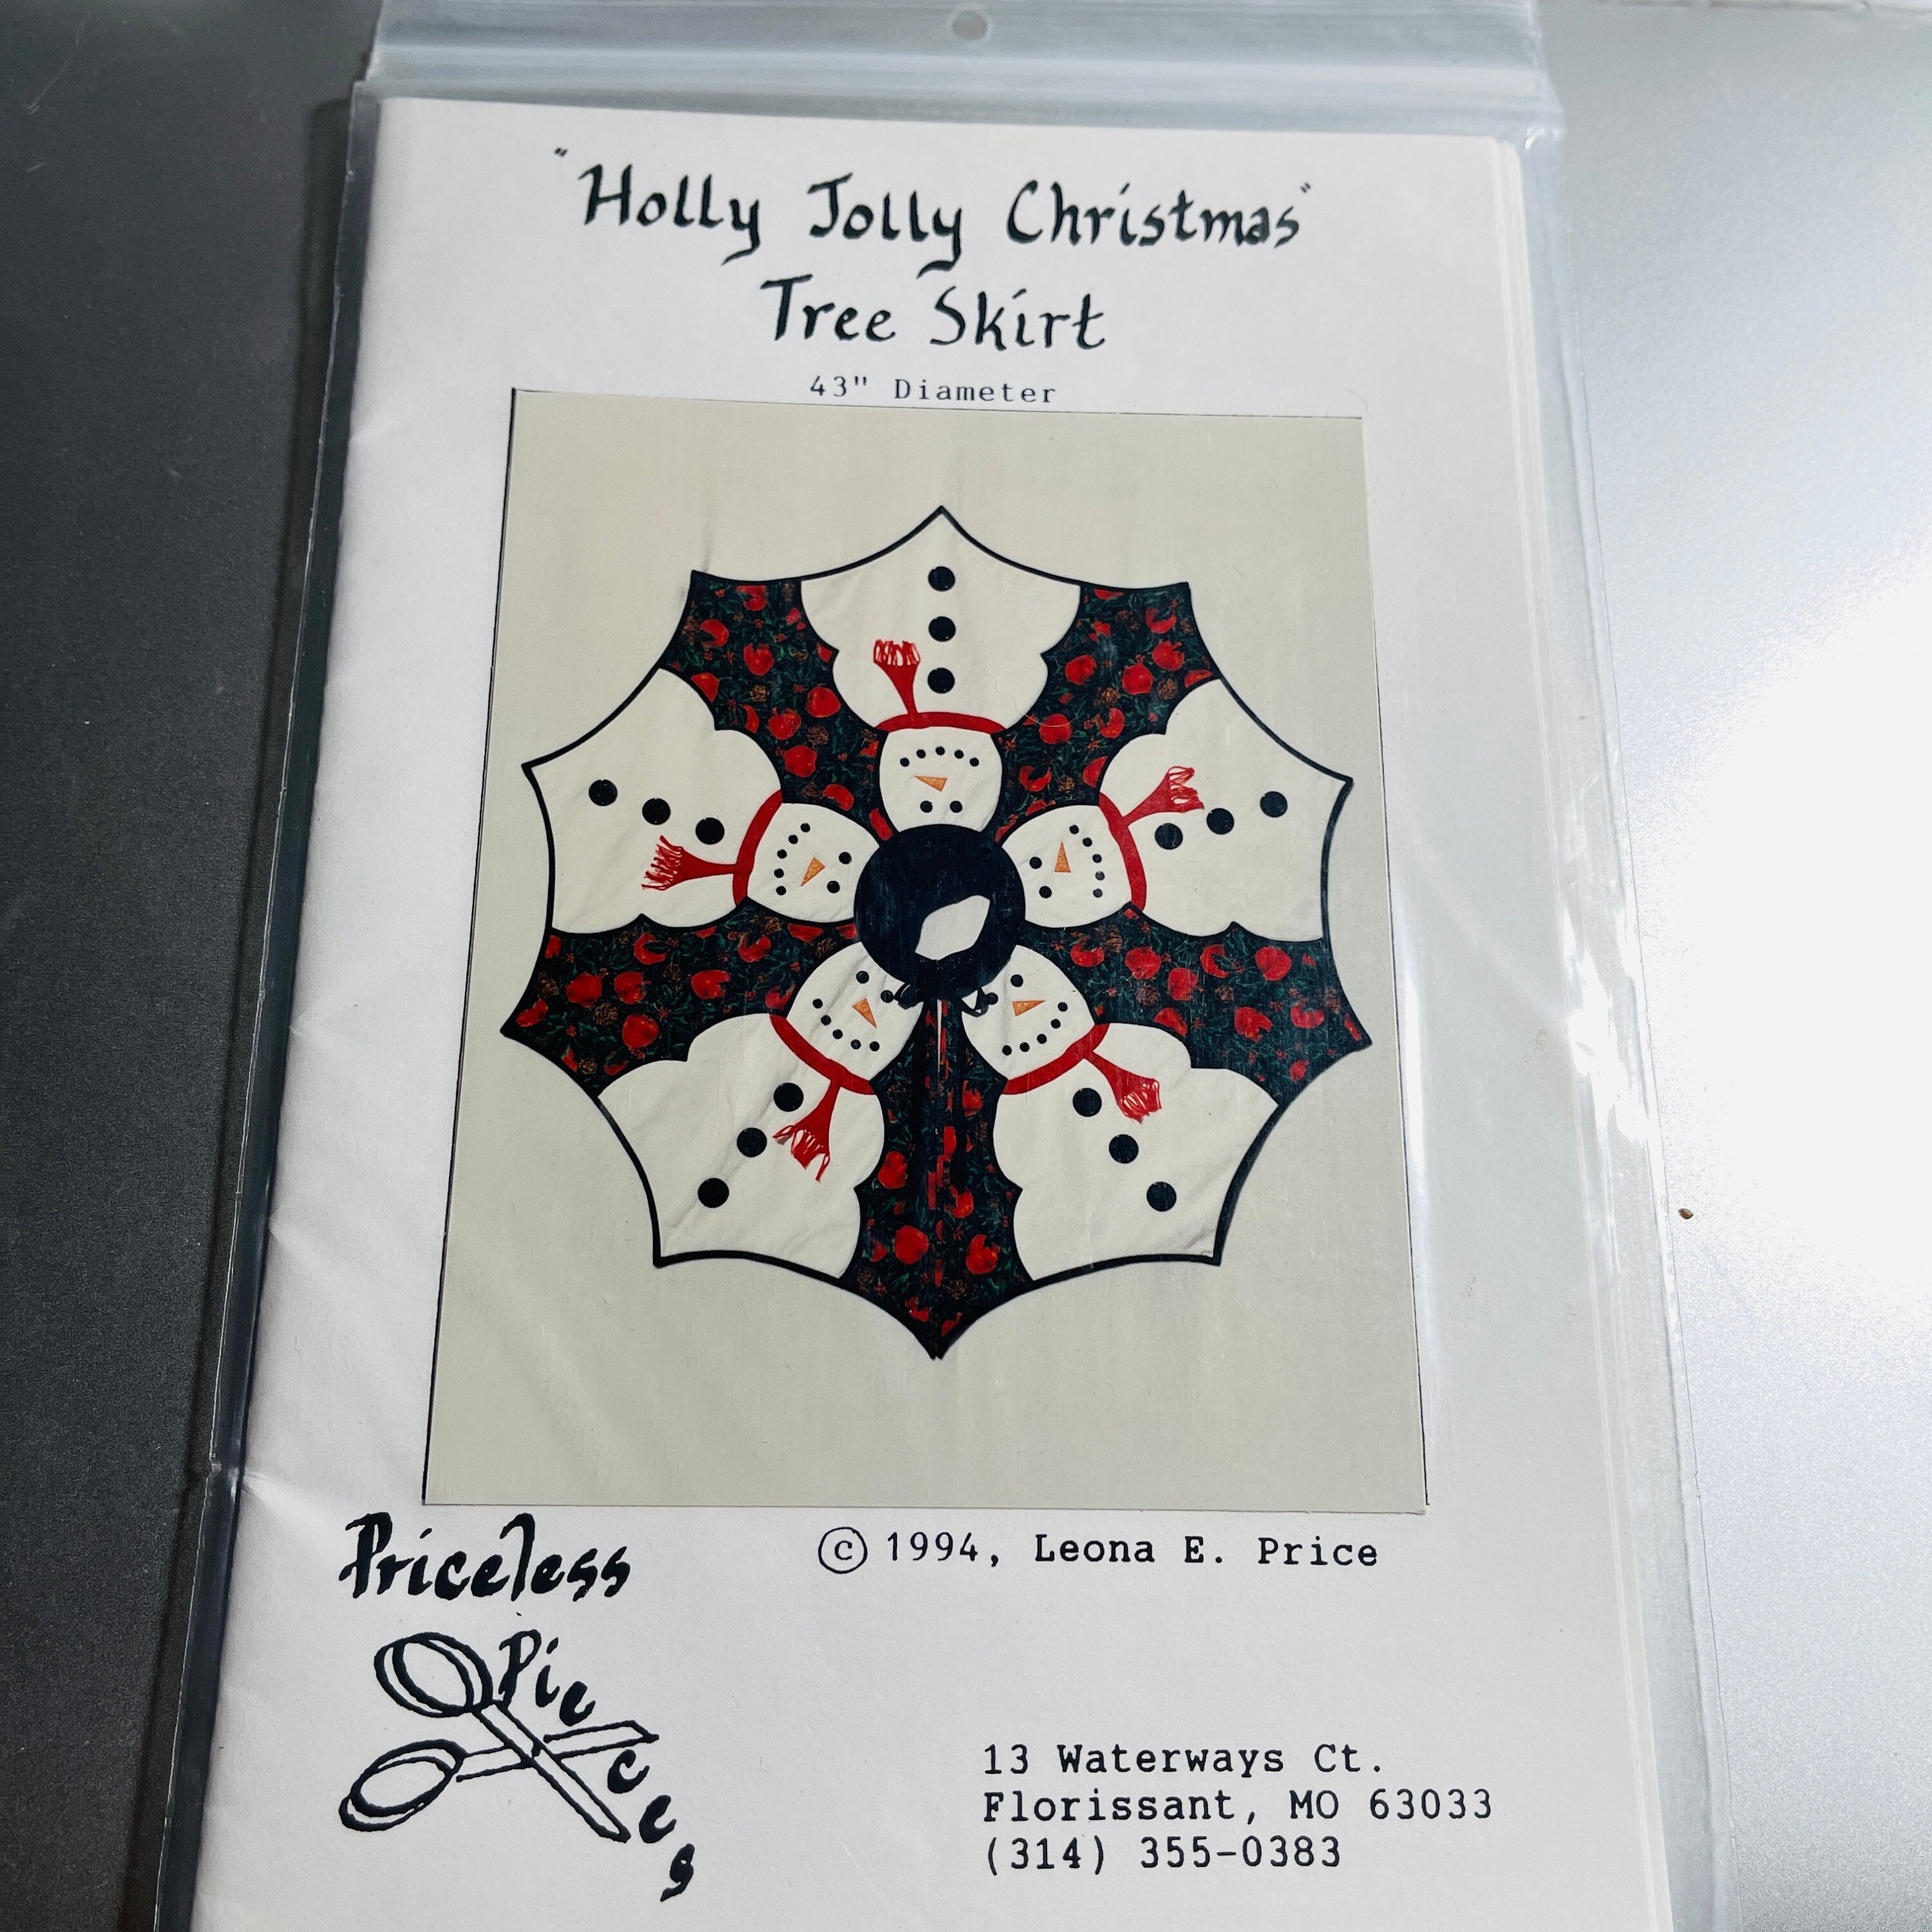 13 Holly Jolly Cross Stitch Christmas Stocking Patterns